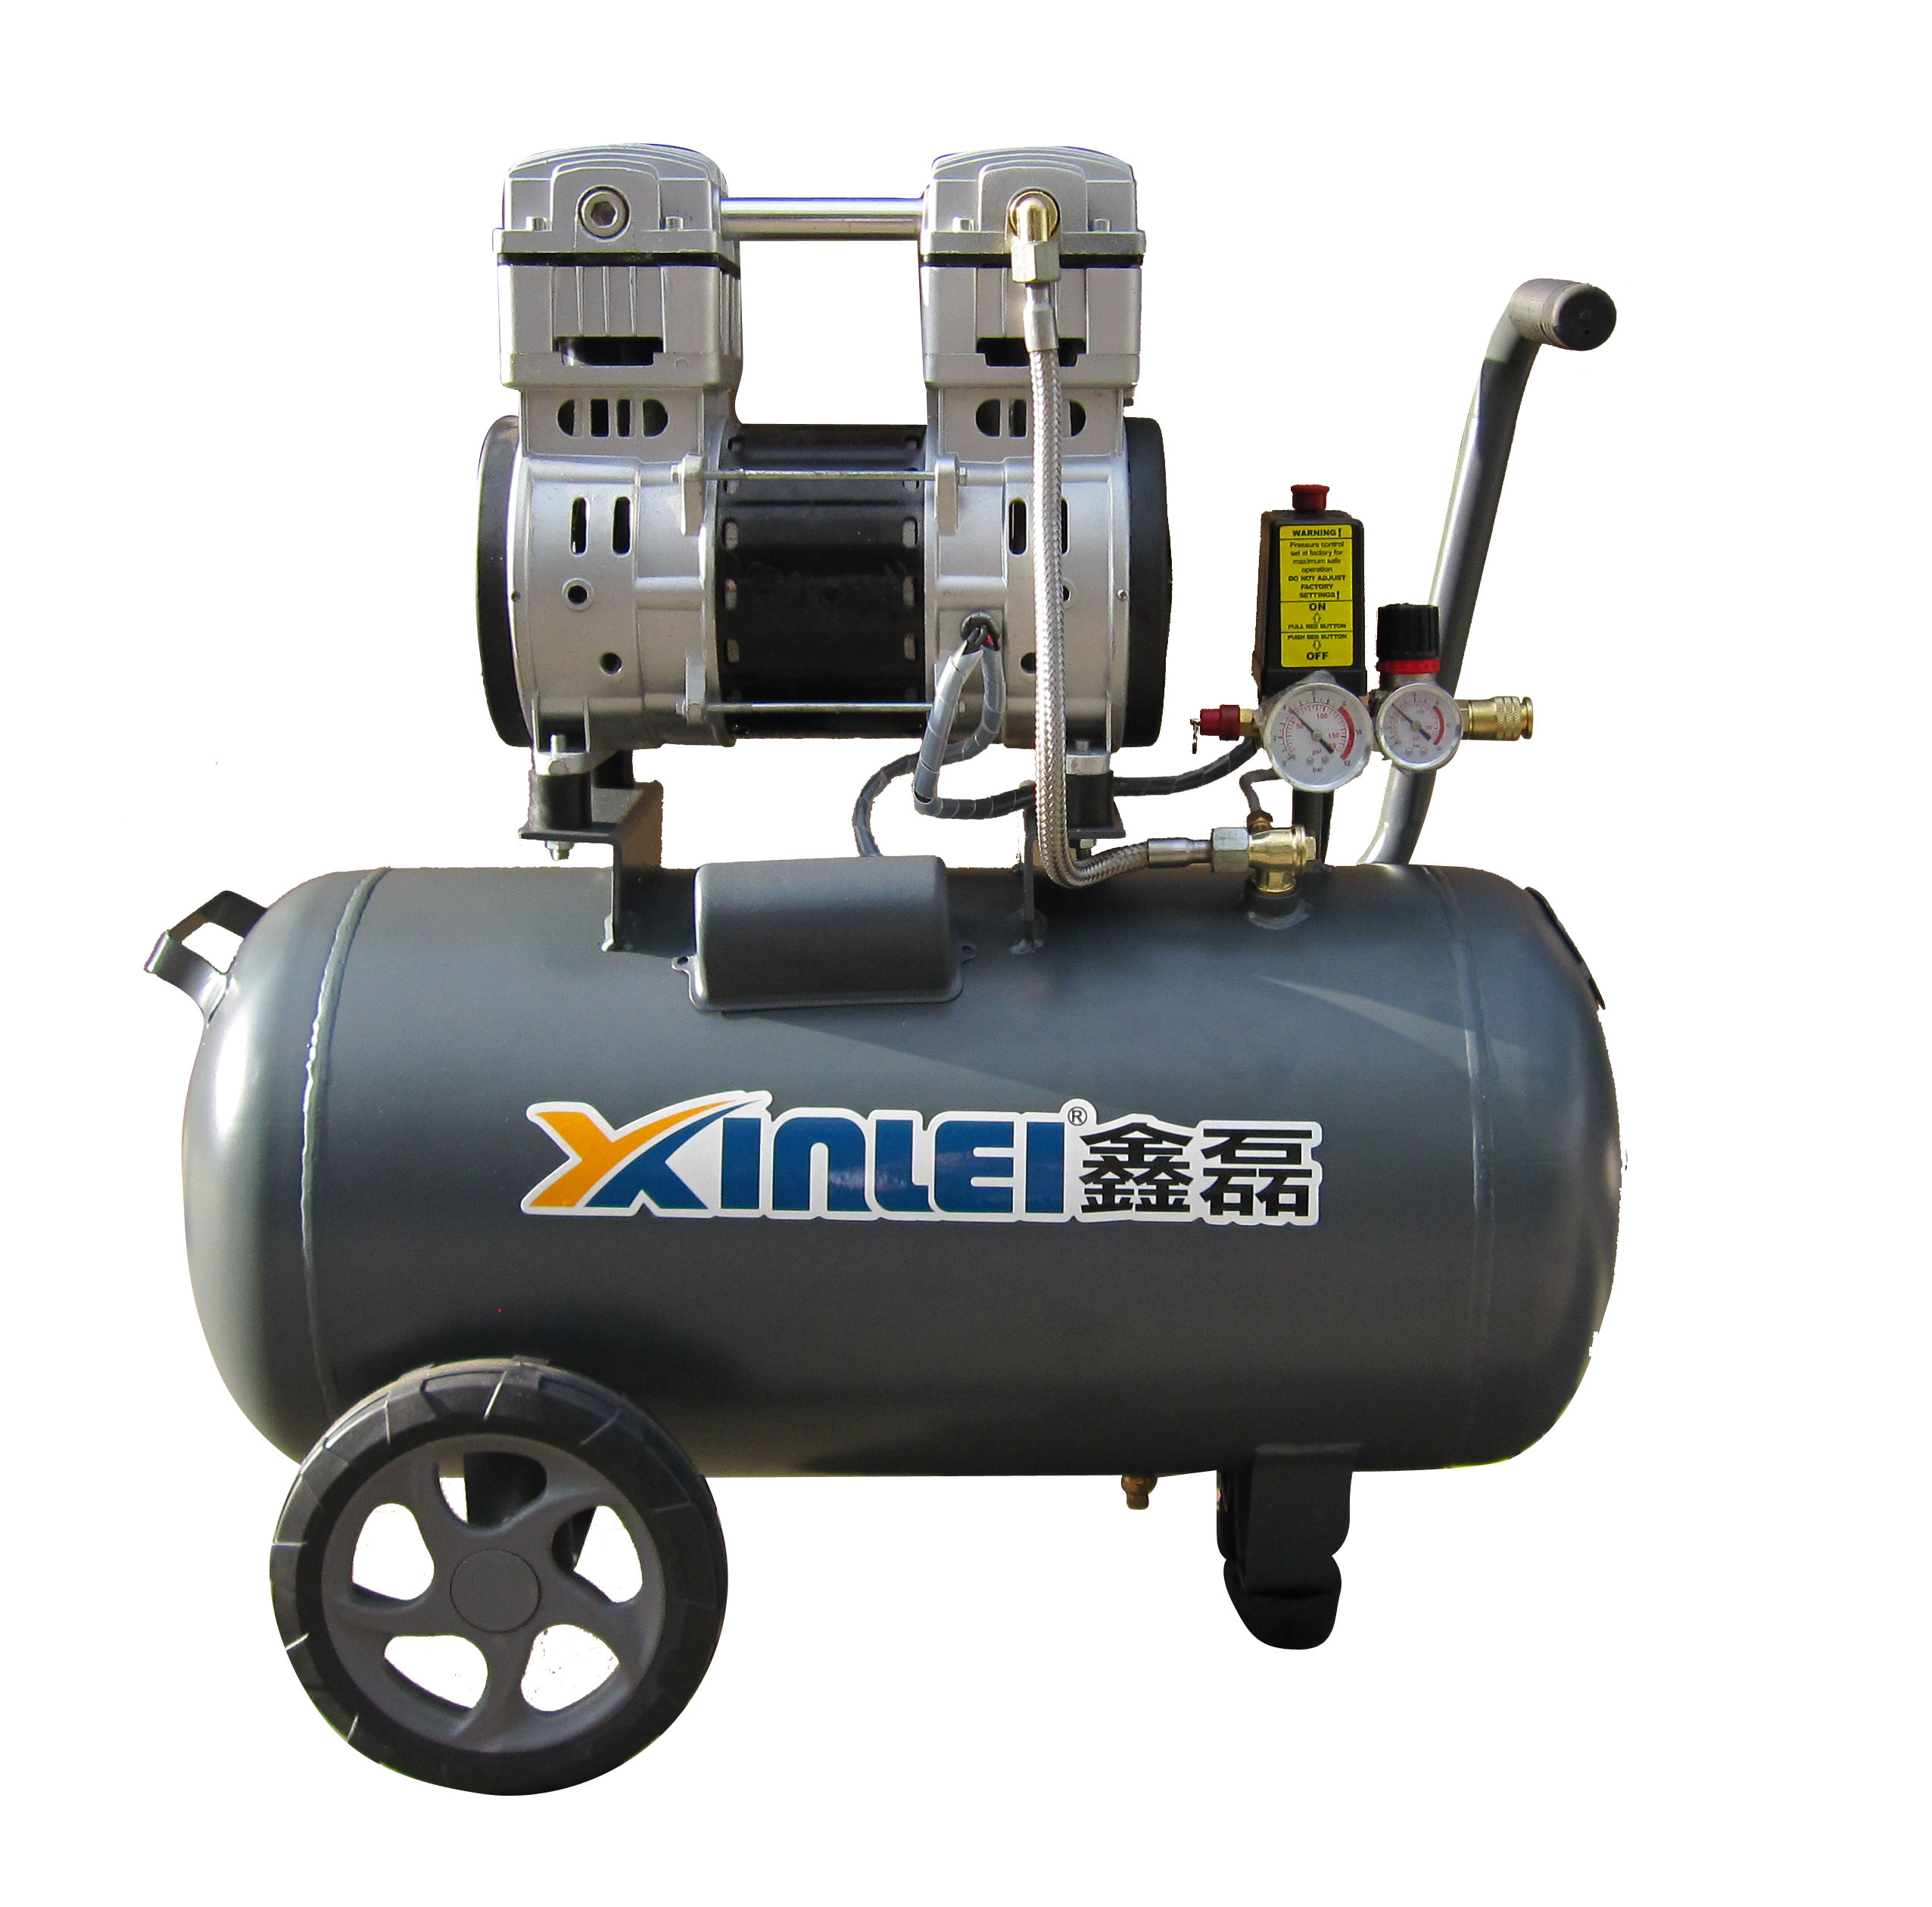 DIY xinlei silient oilfree piston air compressor ZBW64-50L 1500W T1